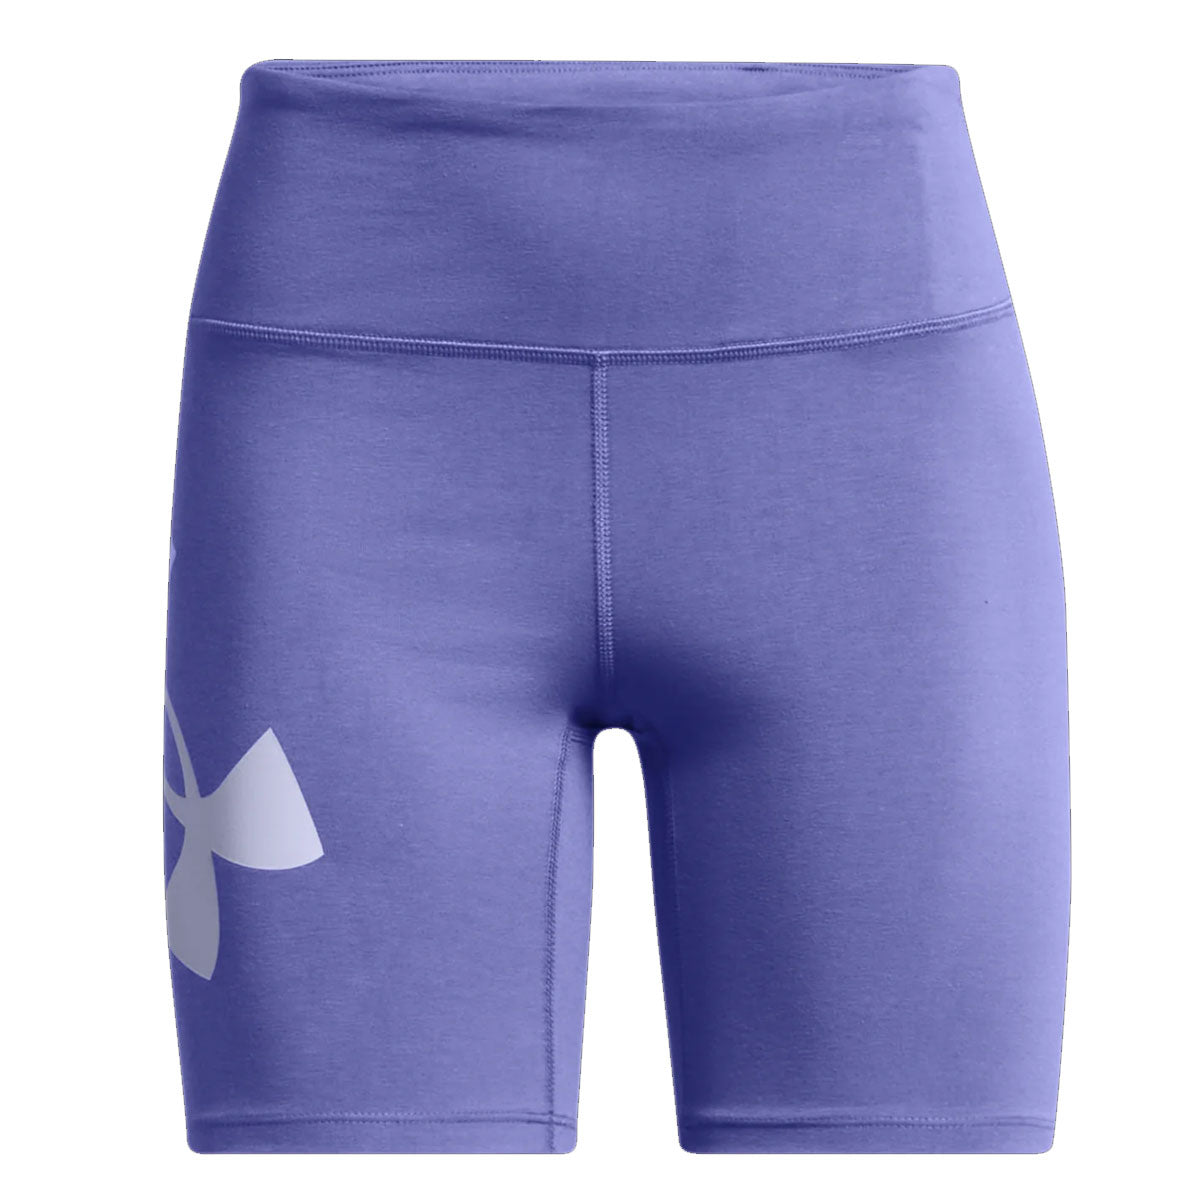 Under Armour Campus 7 inch Shorts - Womens - Starlight/Celeste